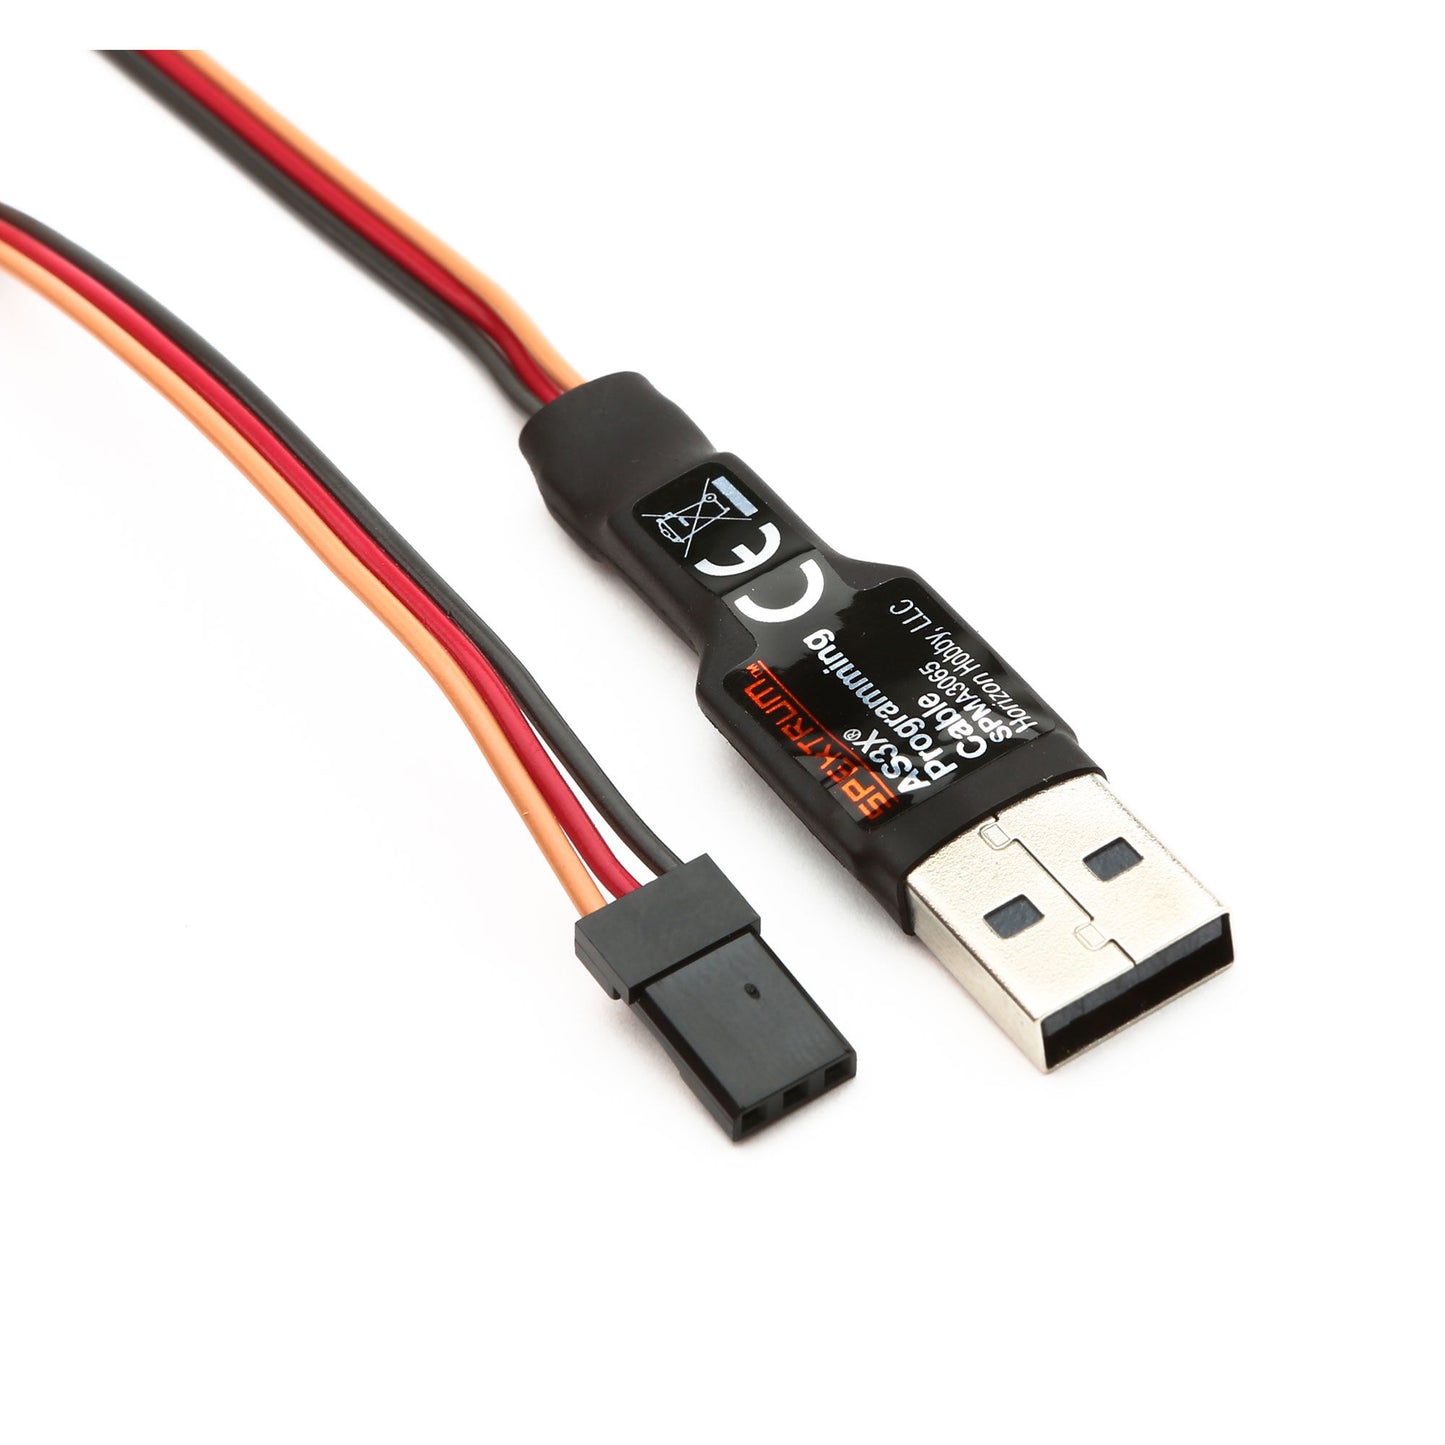 SPMA3065 TX/RX USB Programming Cable